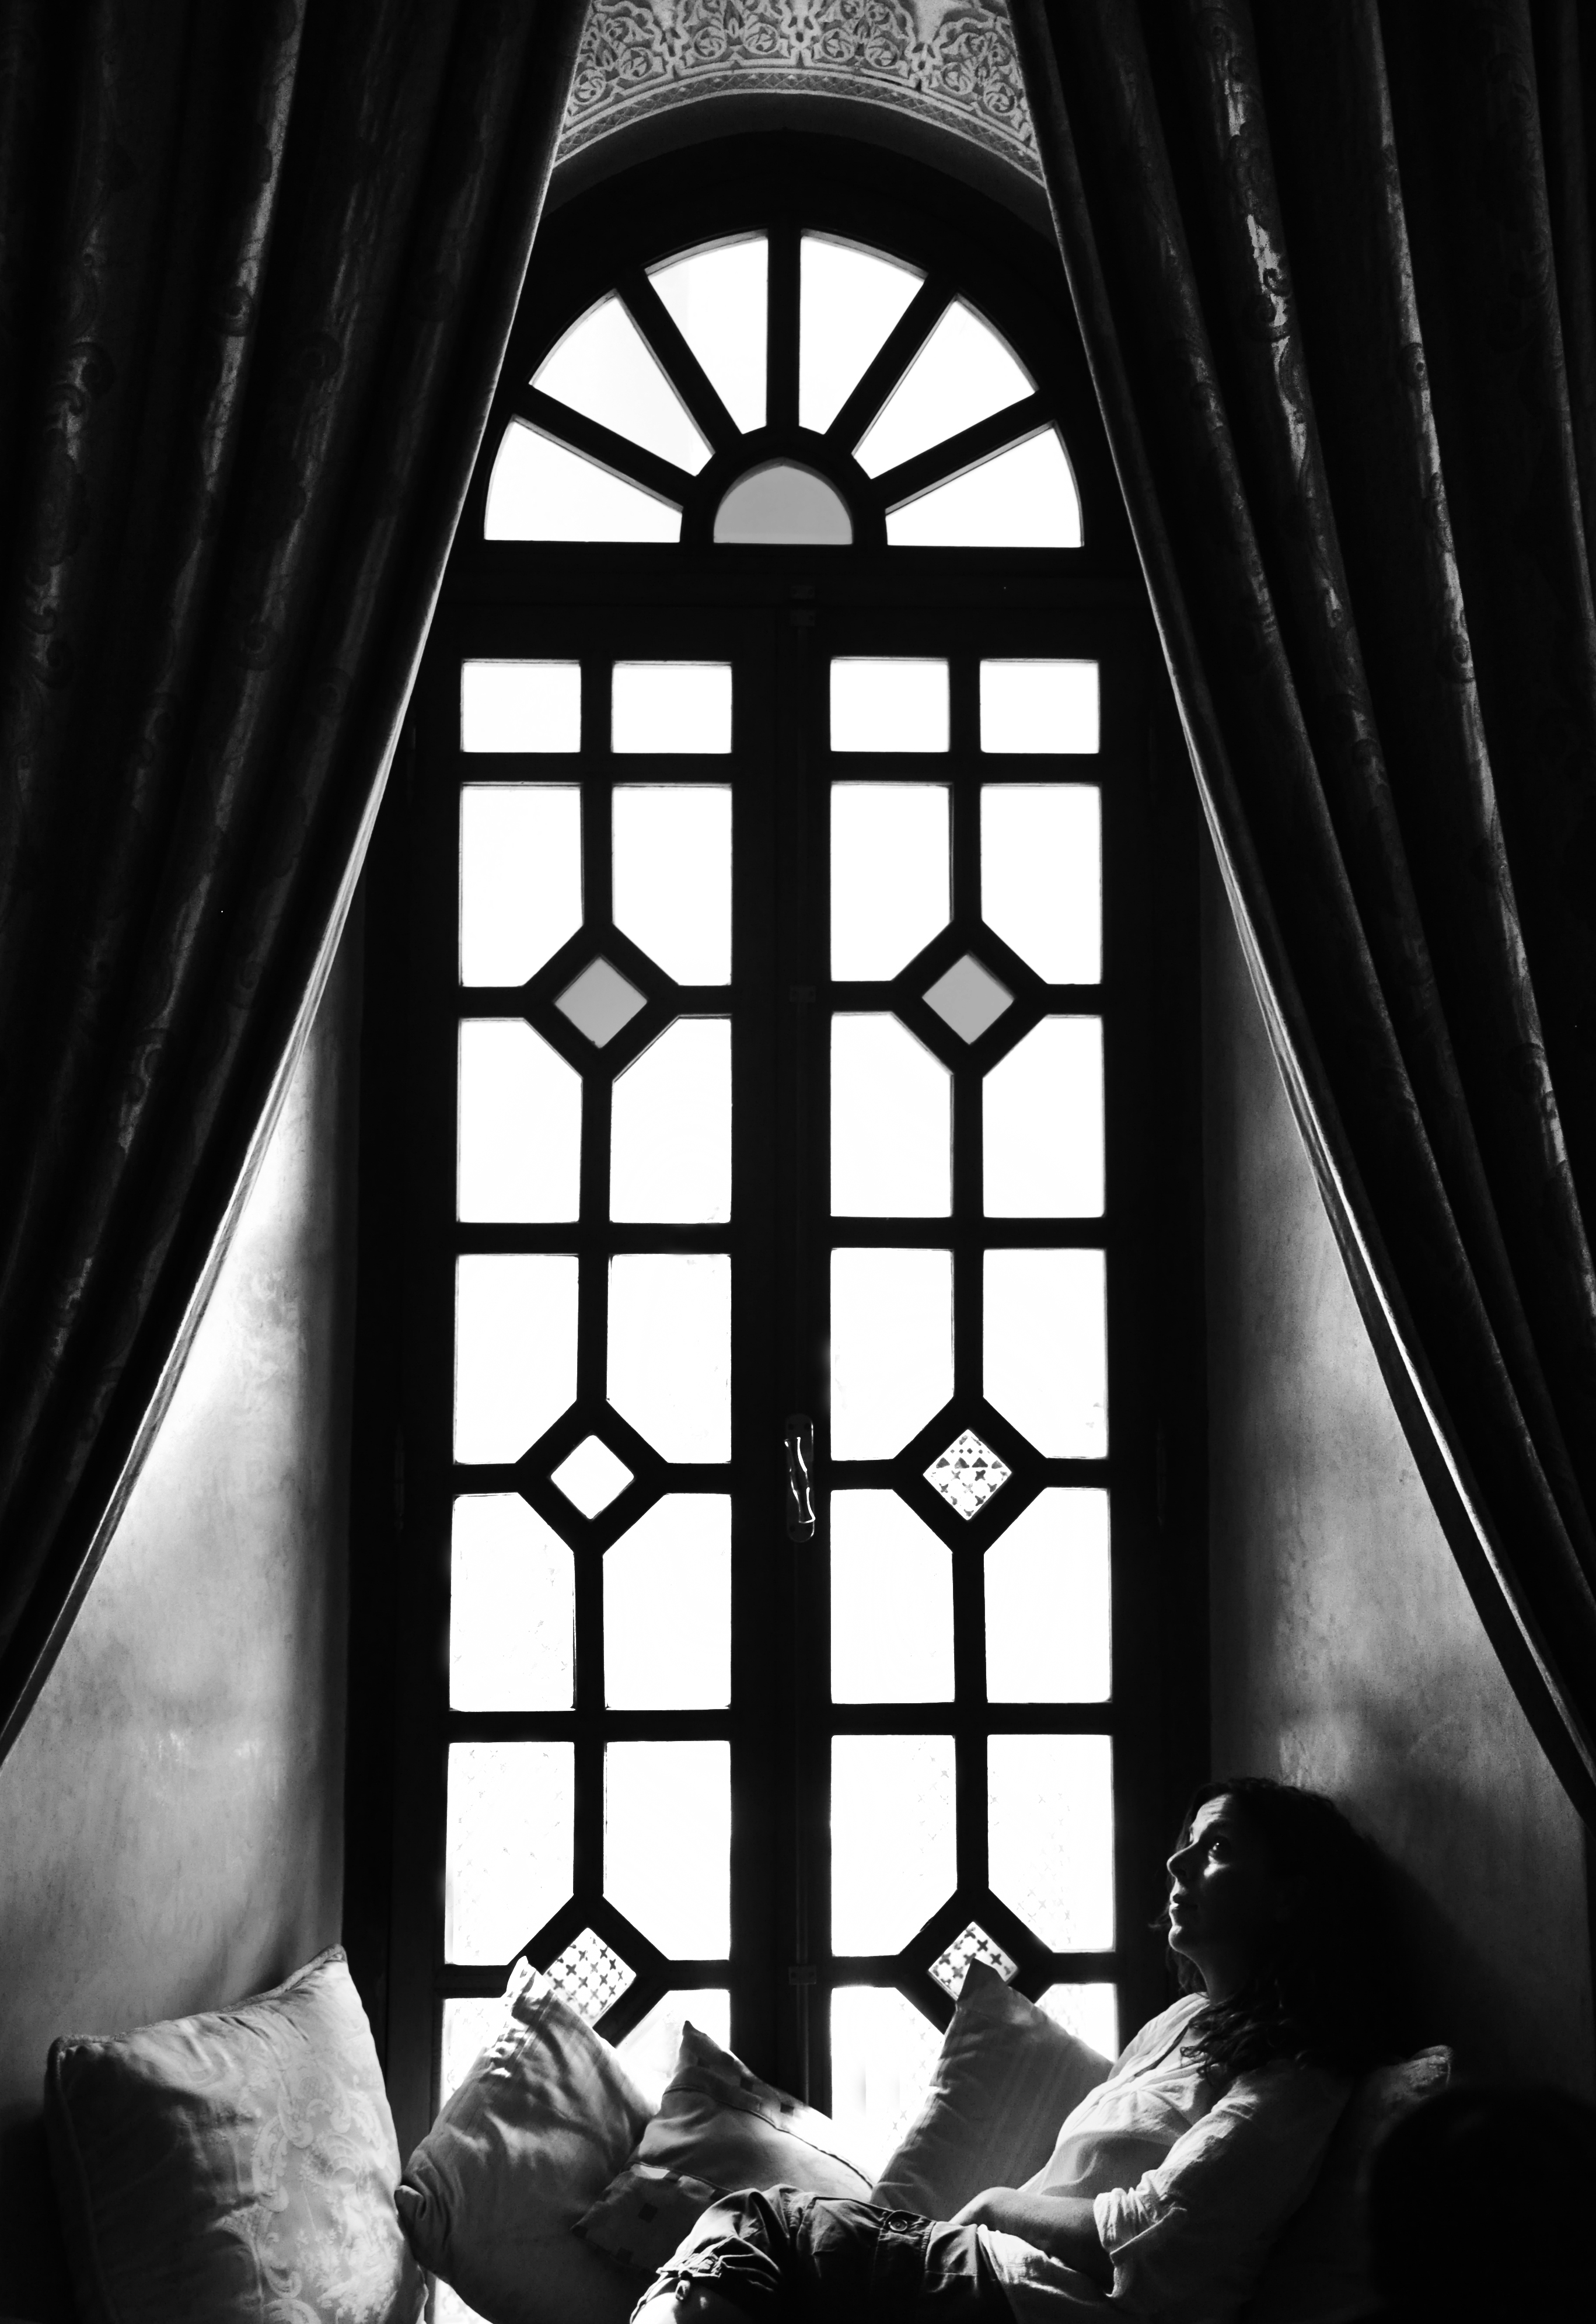 Woman sitting in window sill photo